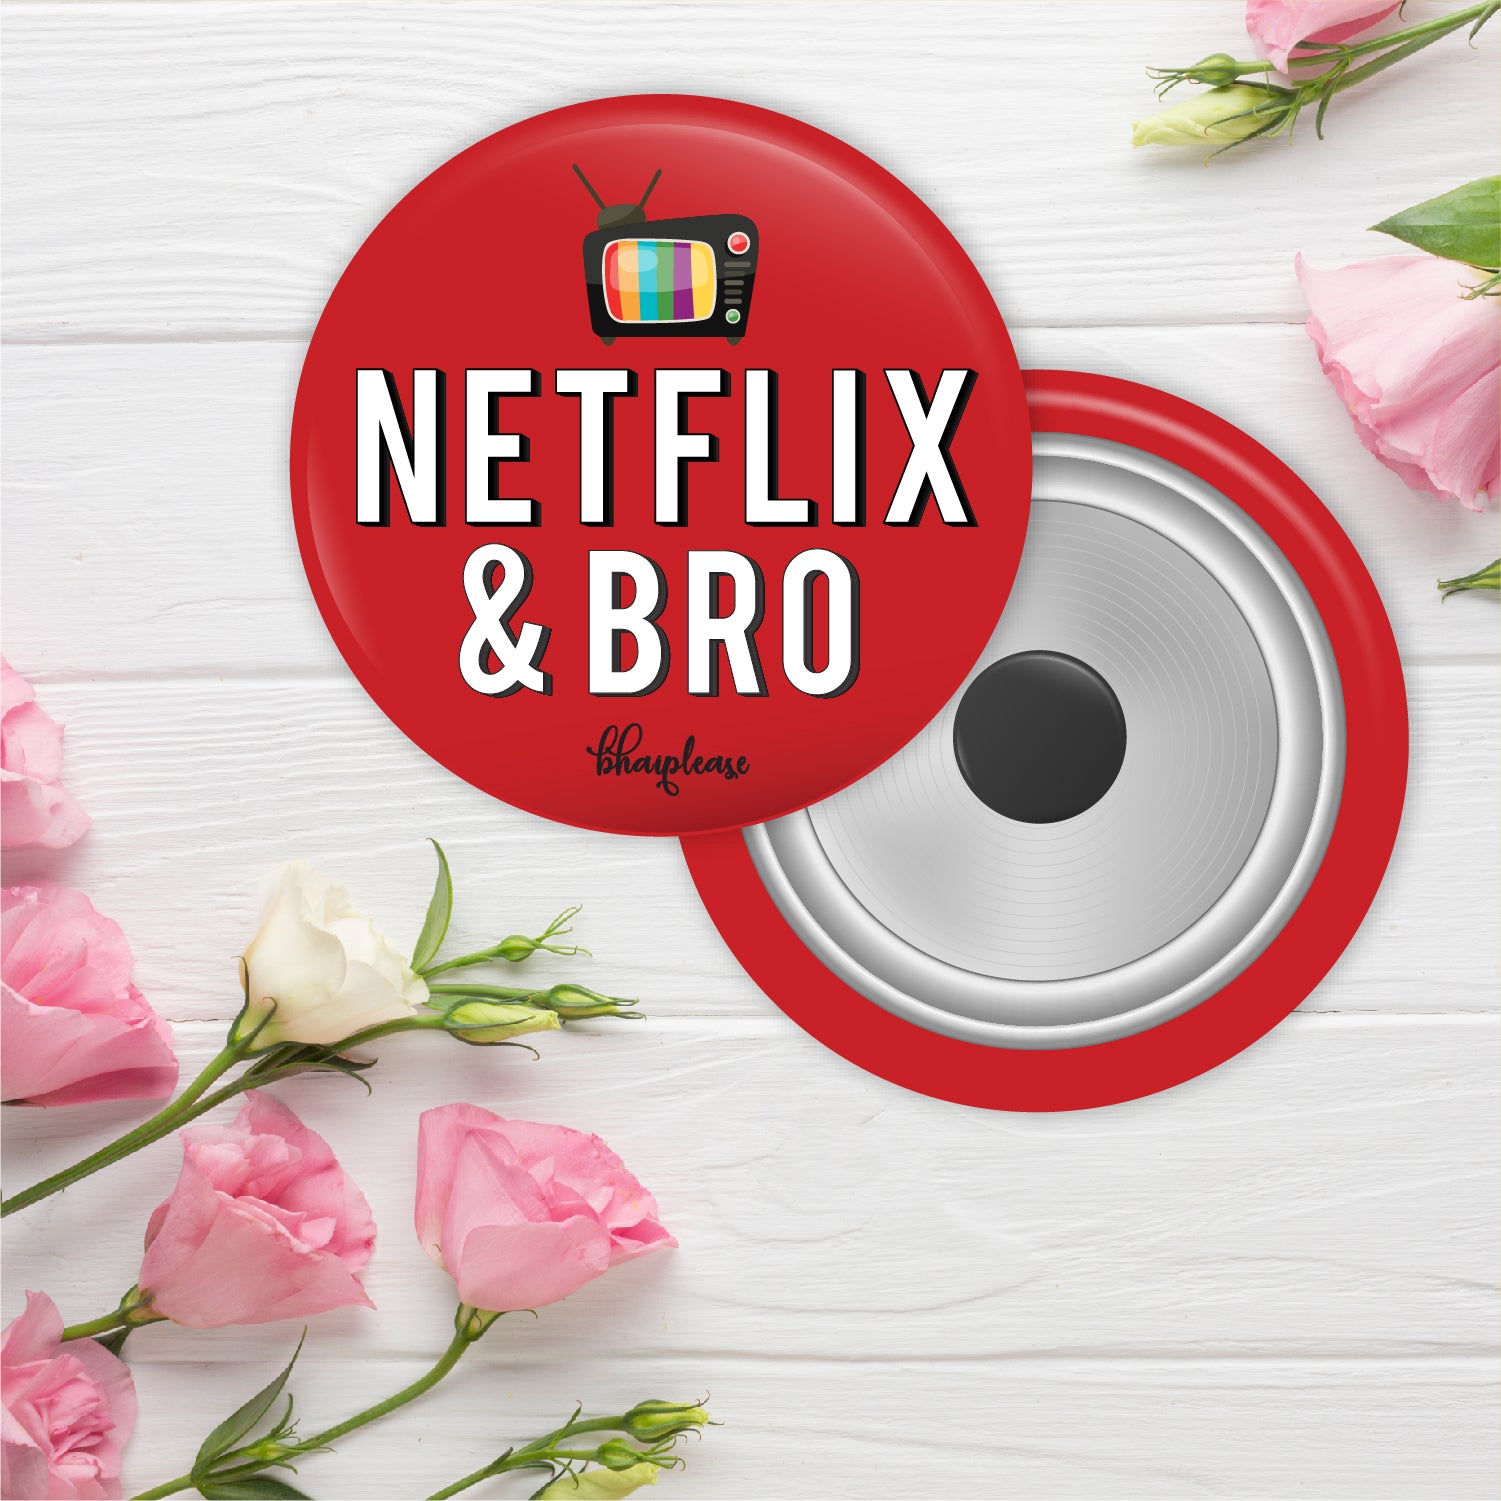 Netflix & Bro Round Fridge Magnet